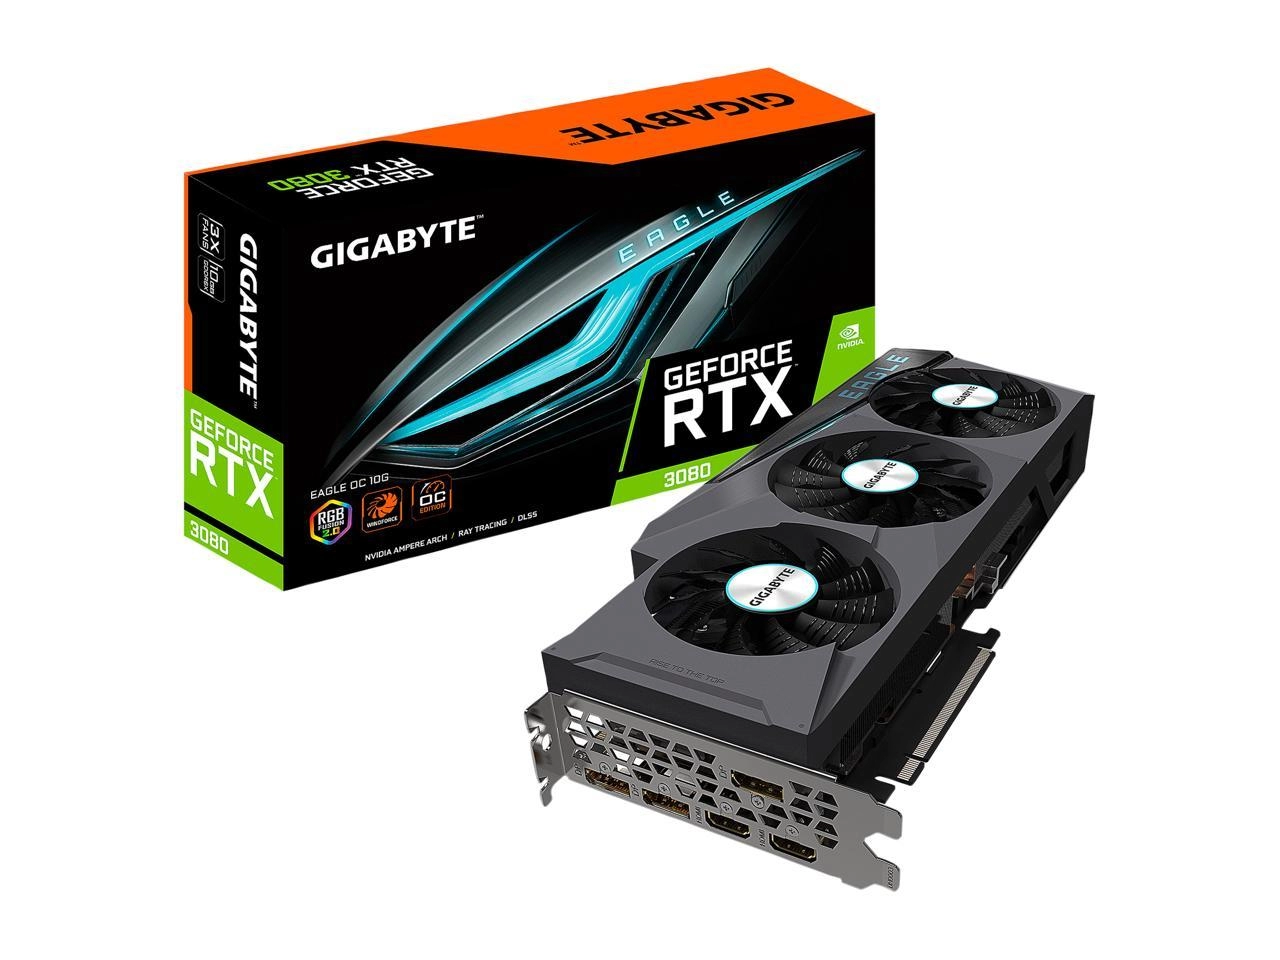 GIGABYTE GeForce RTX 3080 EAGLE OC 10G Package